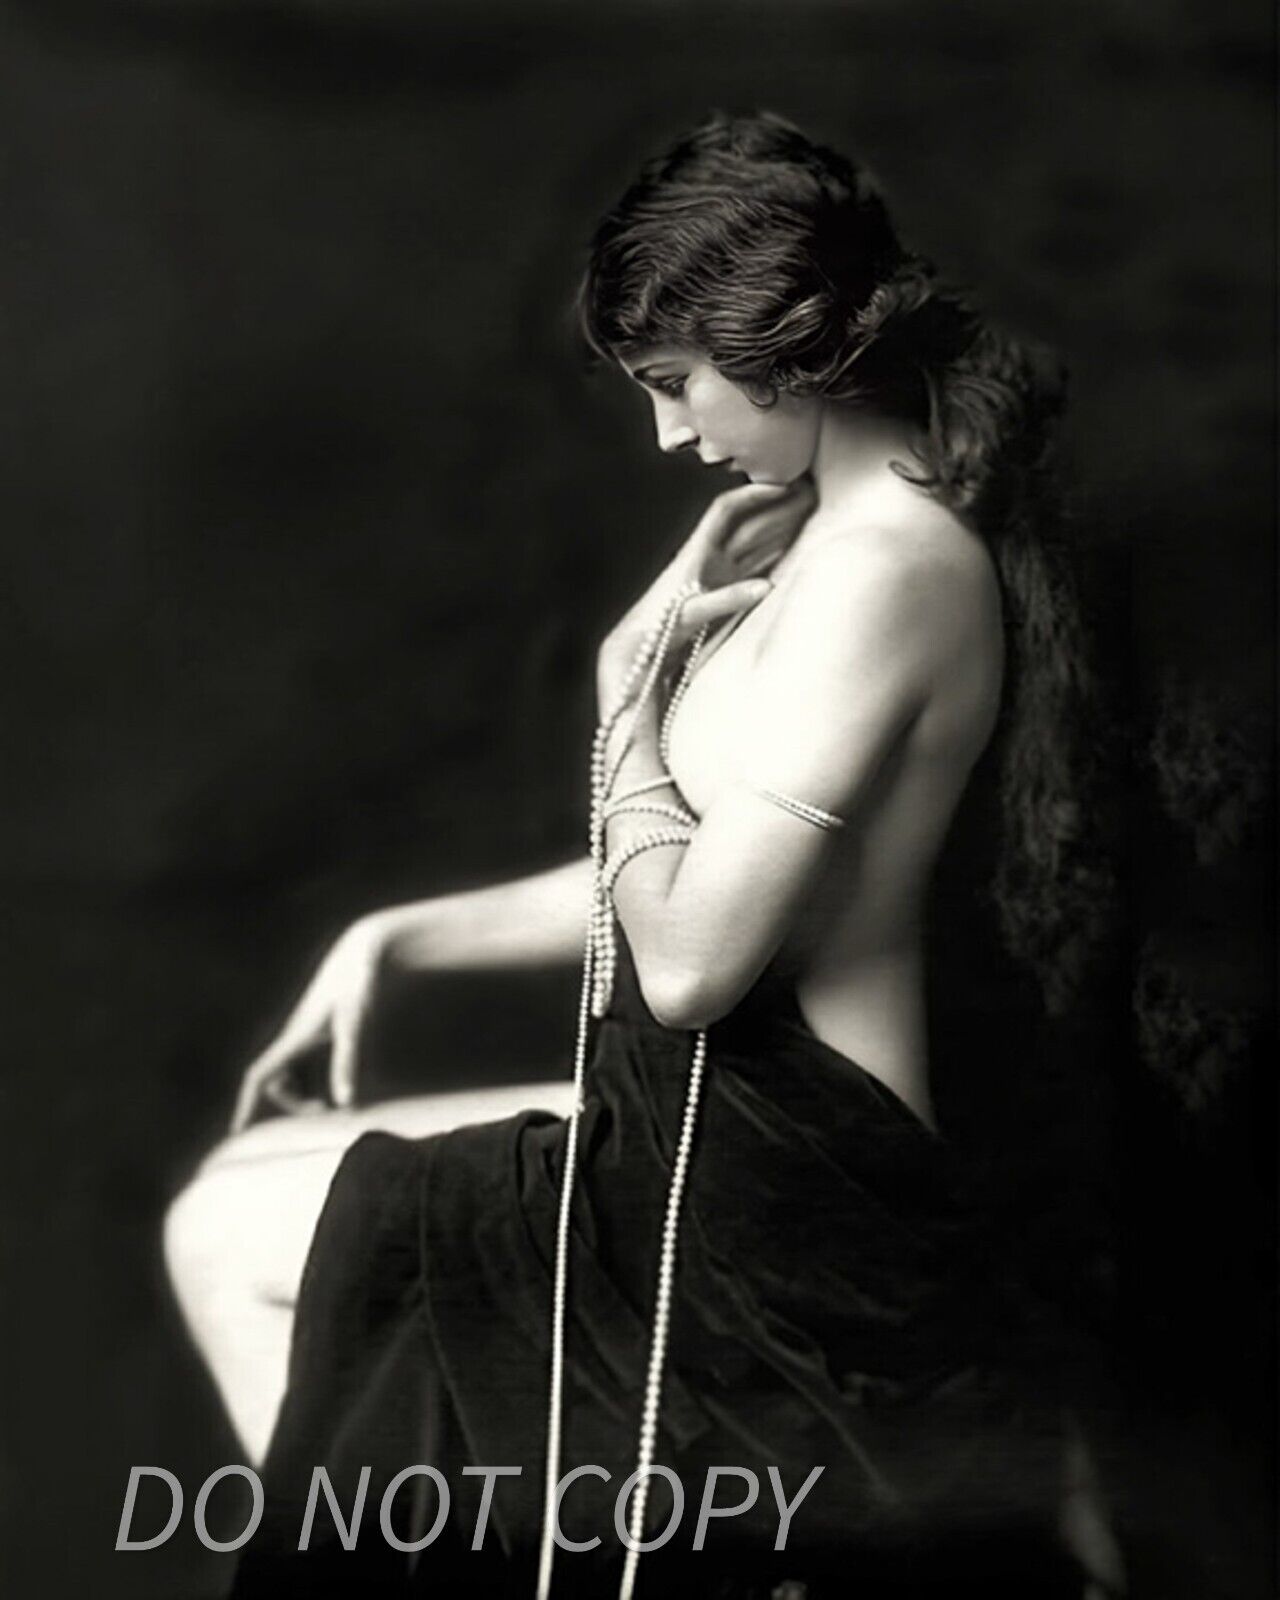 Ziegfeld Follies Dancer Art - Vintage Celebrity Print 8X10 PUBLICITY PHOTO